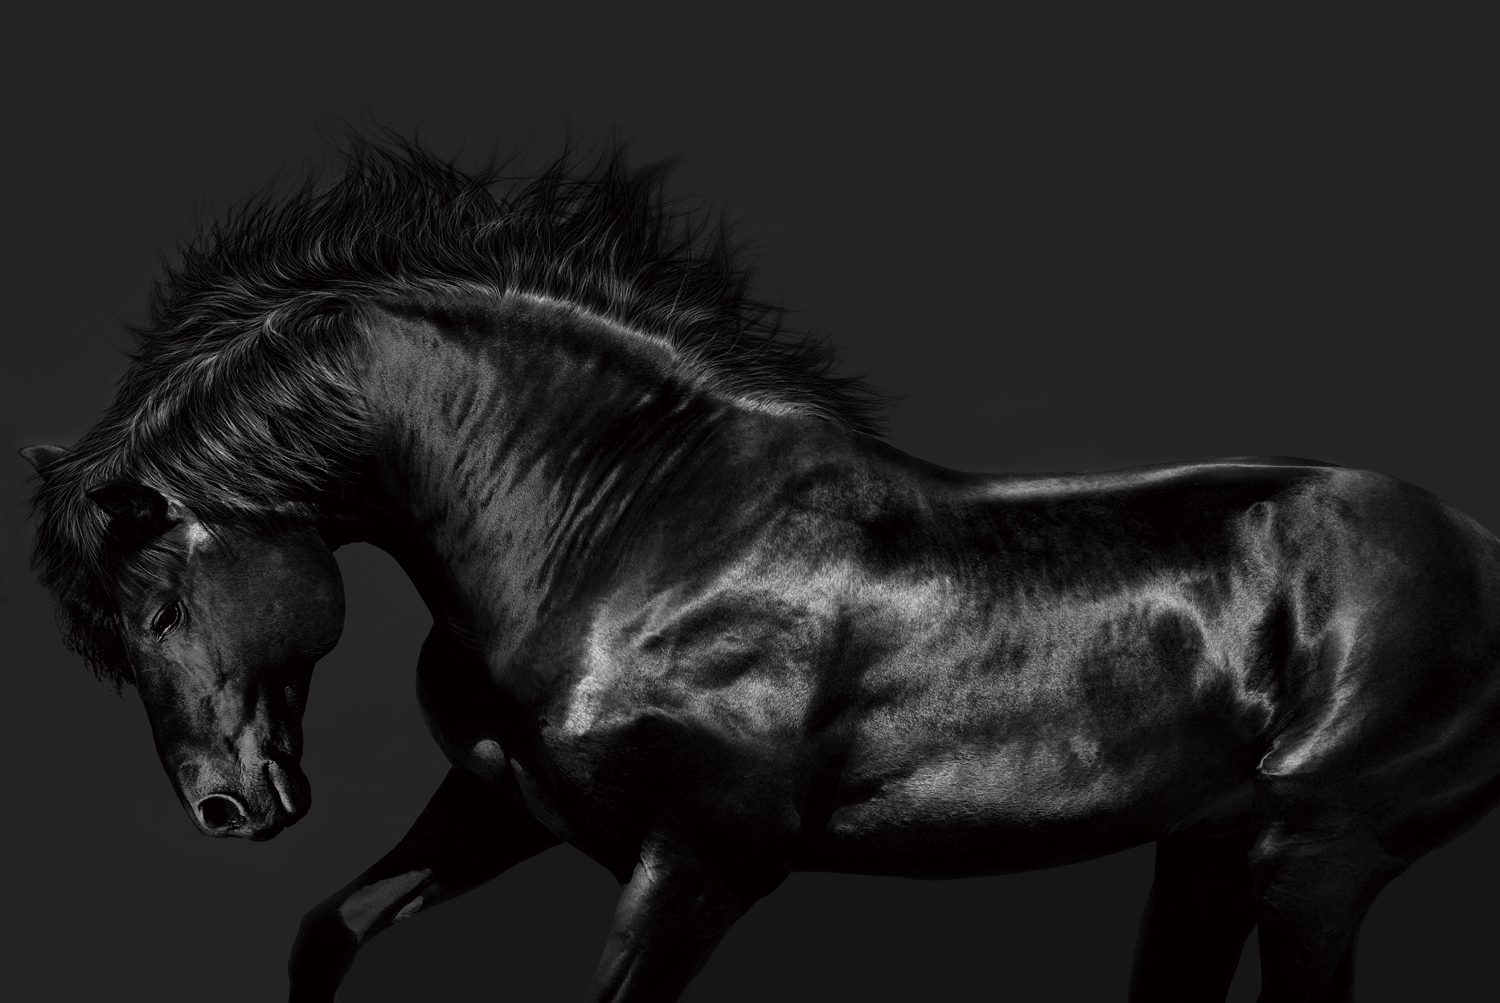 Galloping black horse on dark background